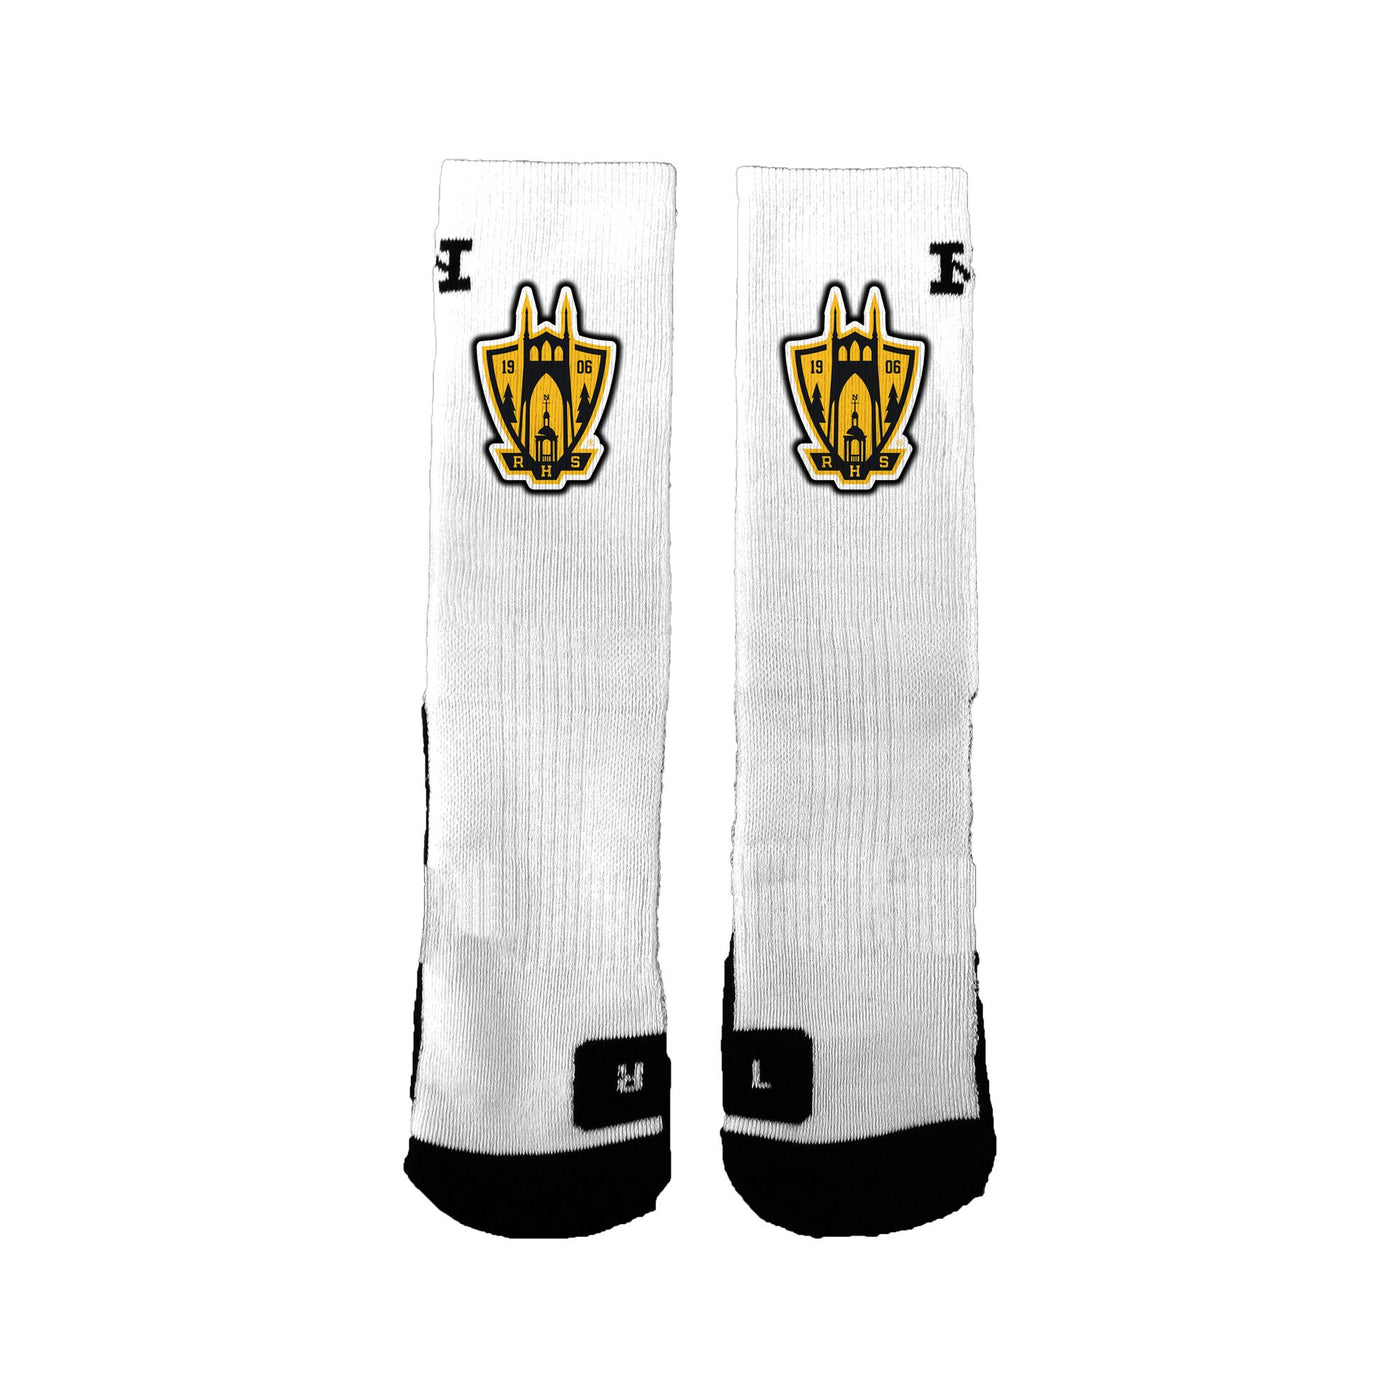 Roosevelt High School Boys Soccer Logo Socks